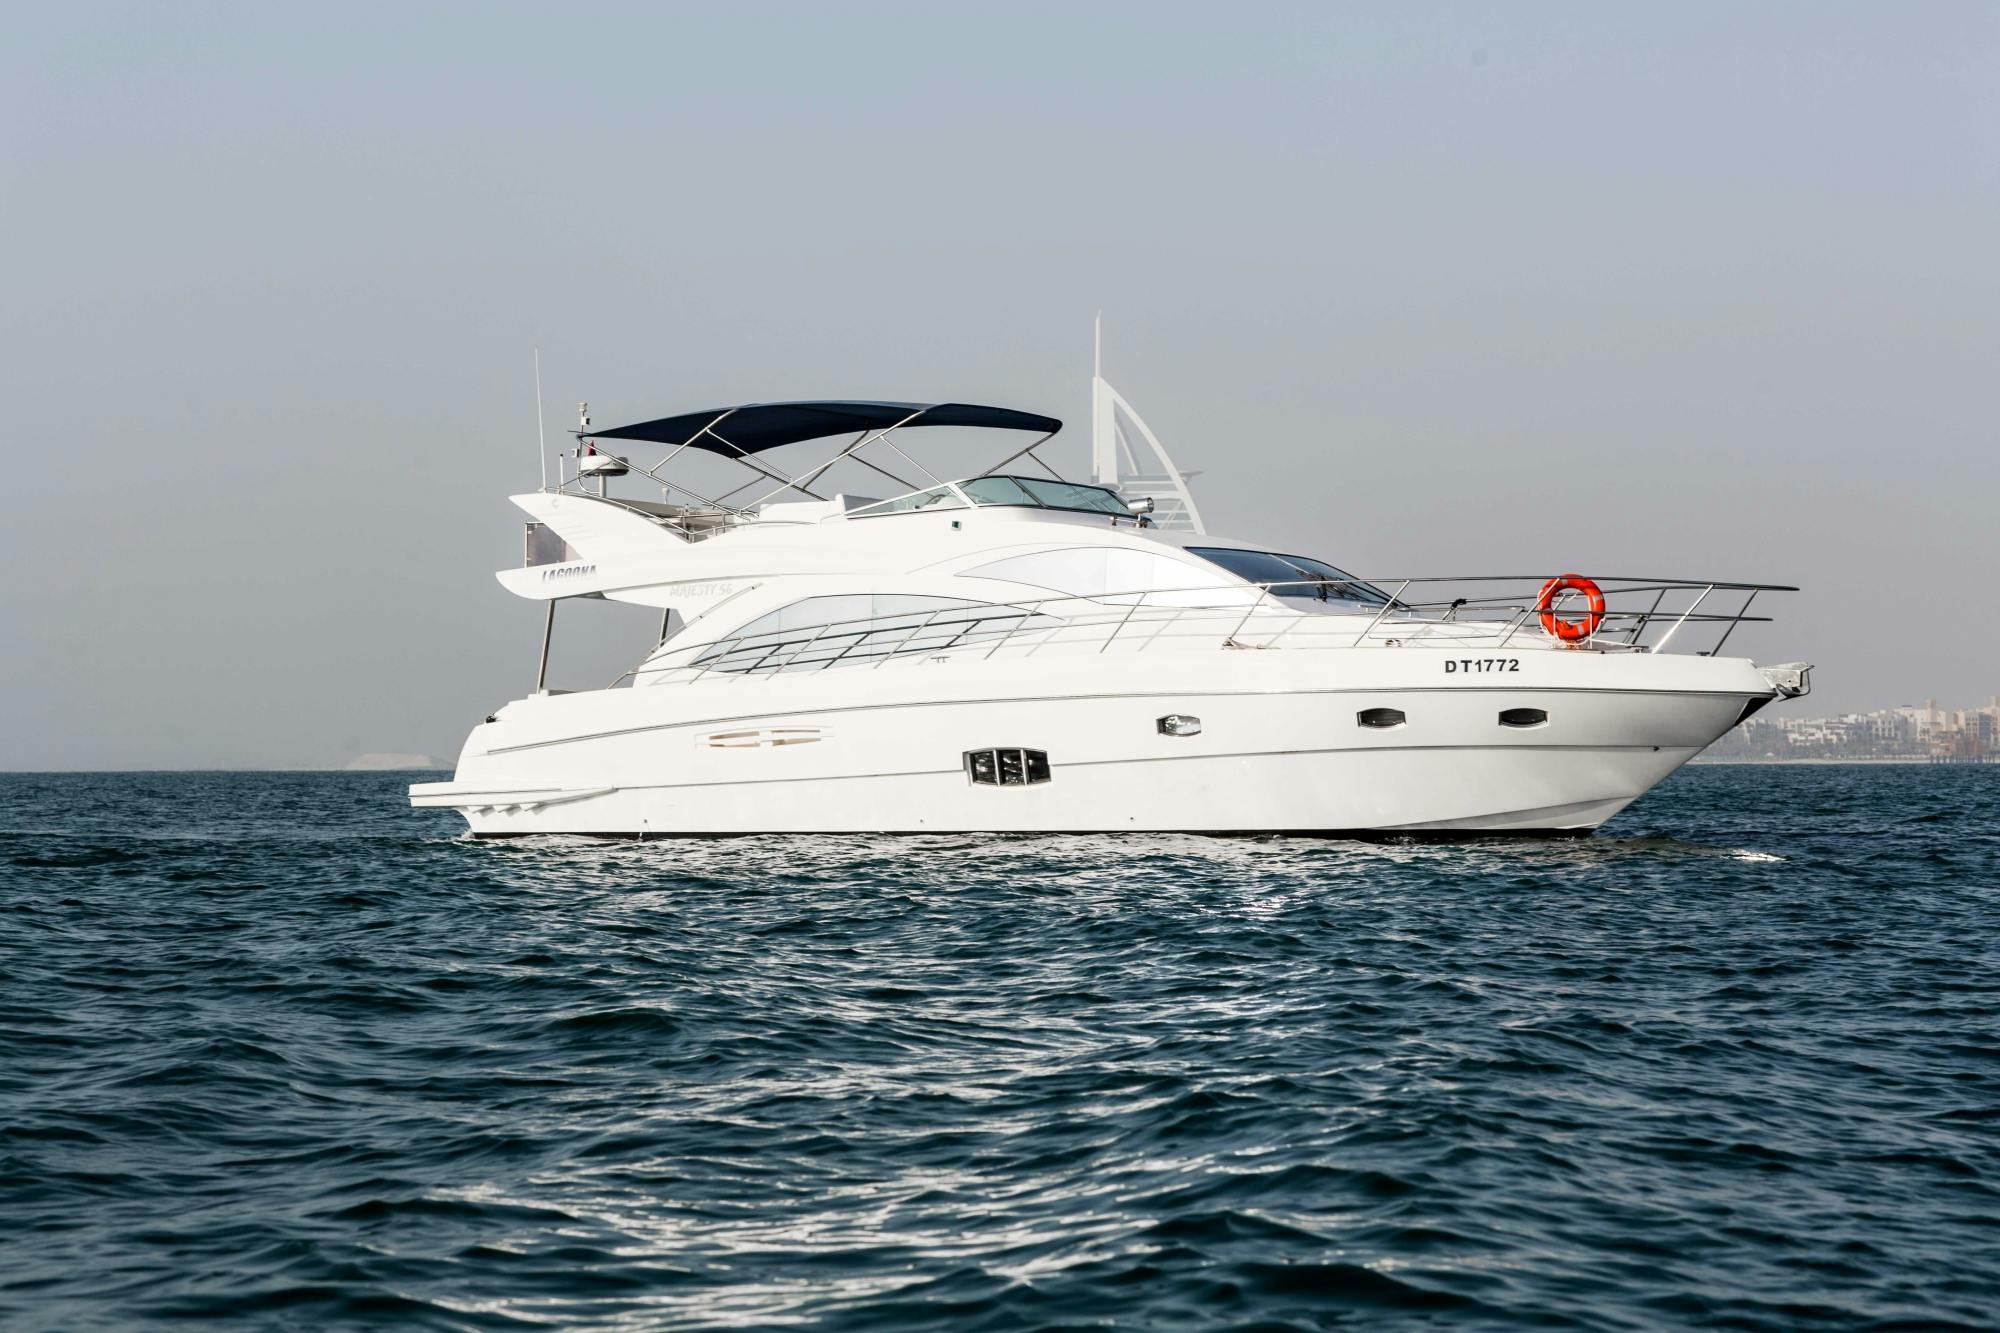 Dubai luxury yacht private cruise on the 56 ft. Lagoona Musement